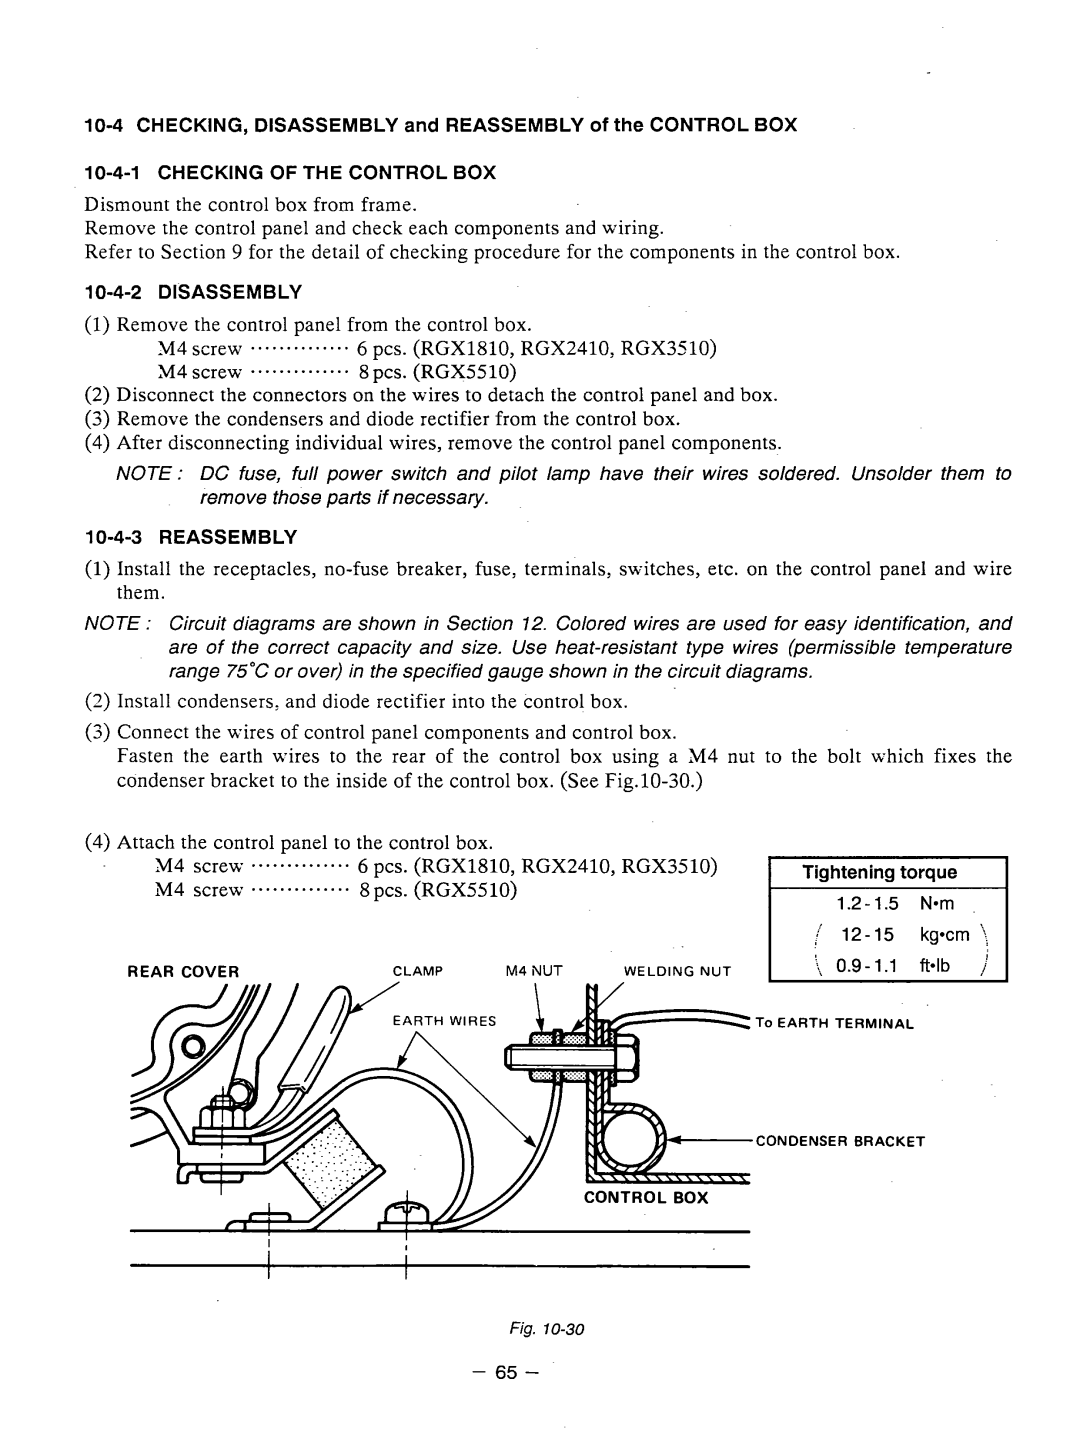 Subaru Robin Power Products RGX3510 manual M4 screw, “4 ScreLV, M4 scre\v 